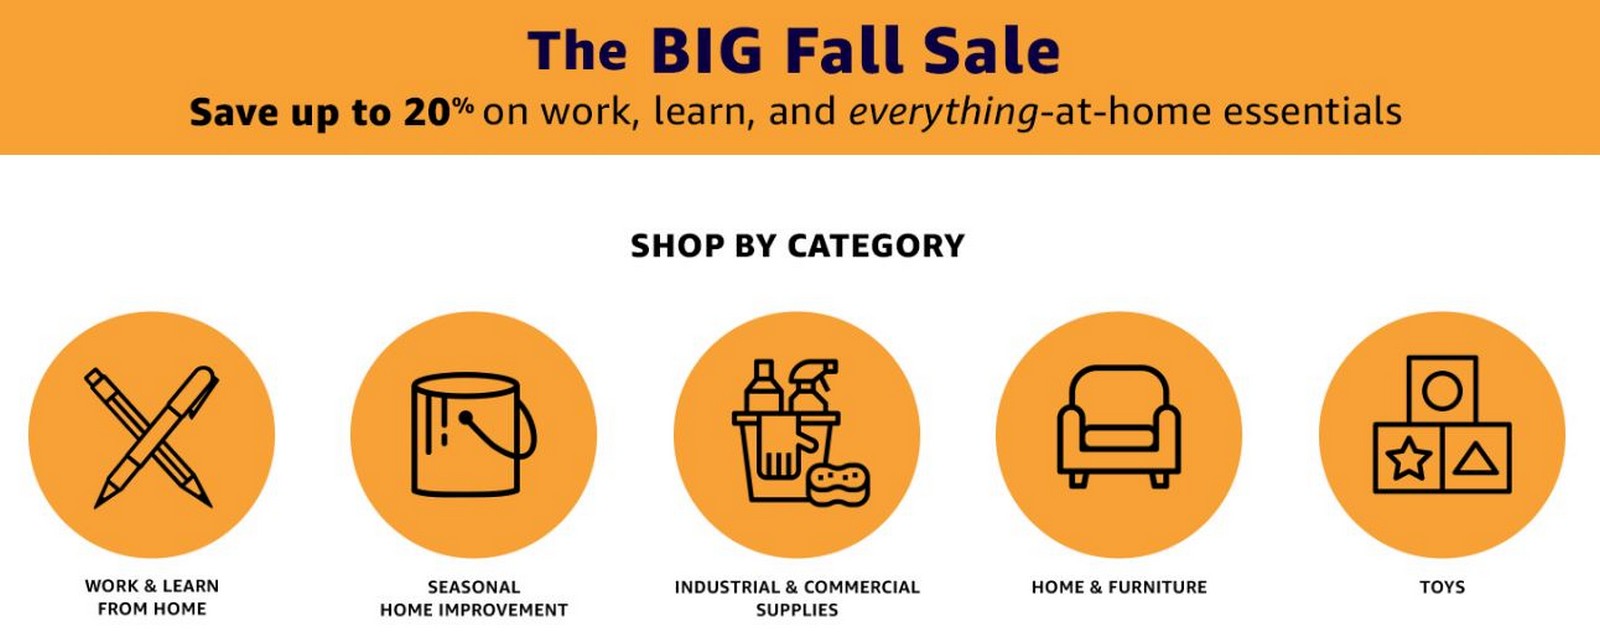 Amazon's The Big Fall Sale